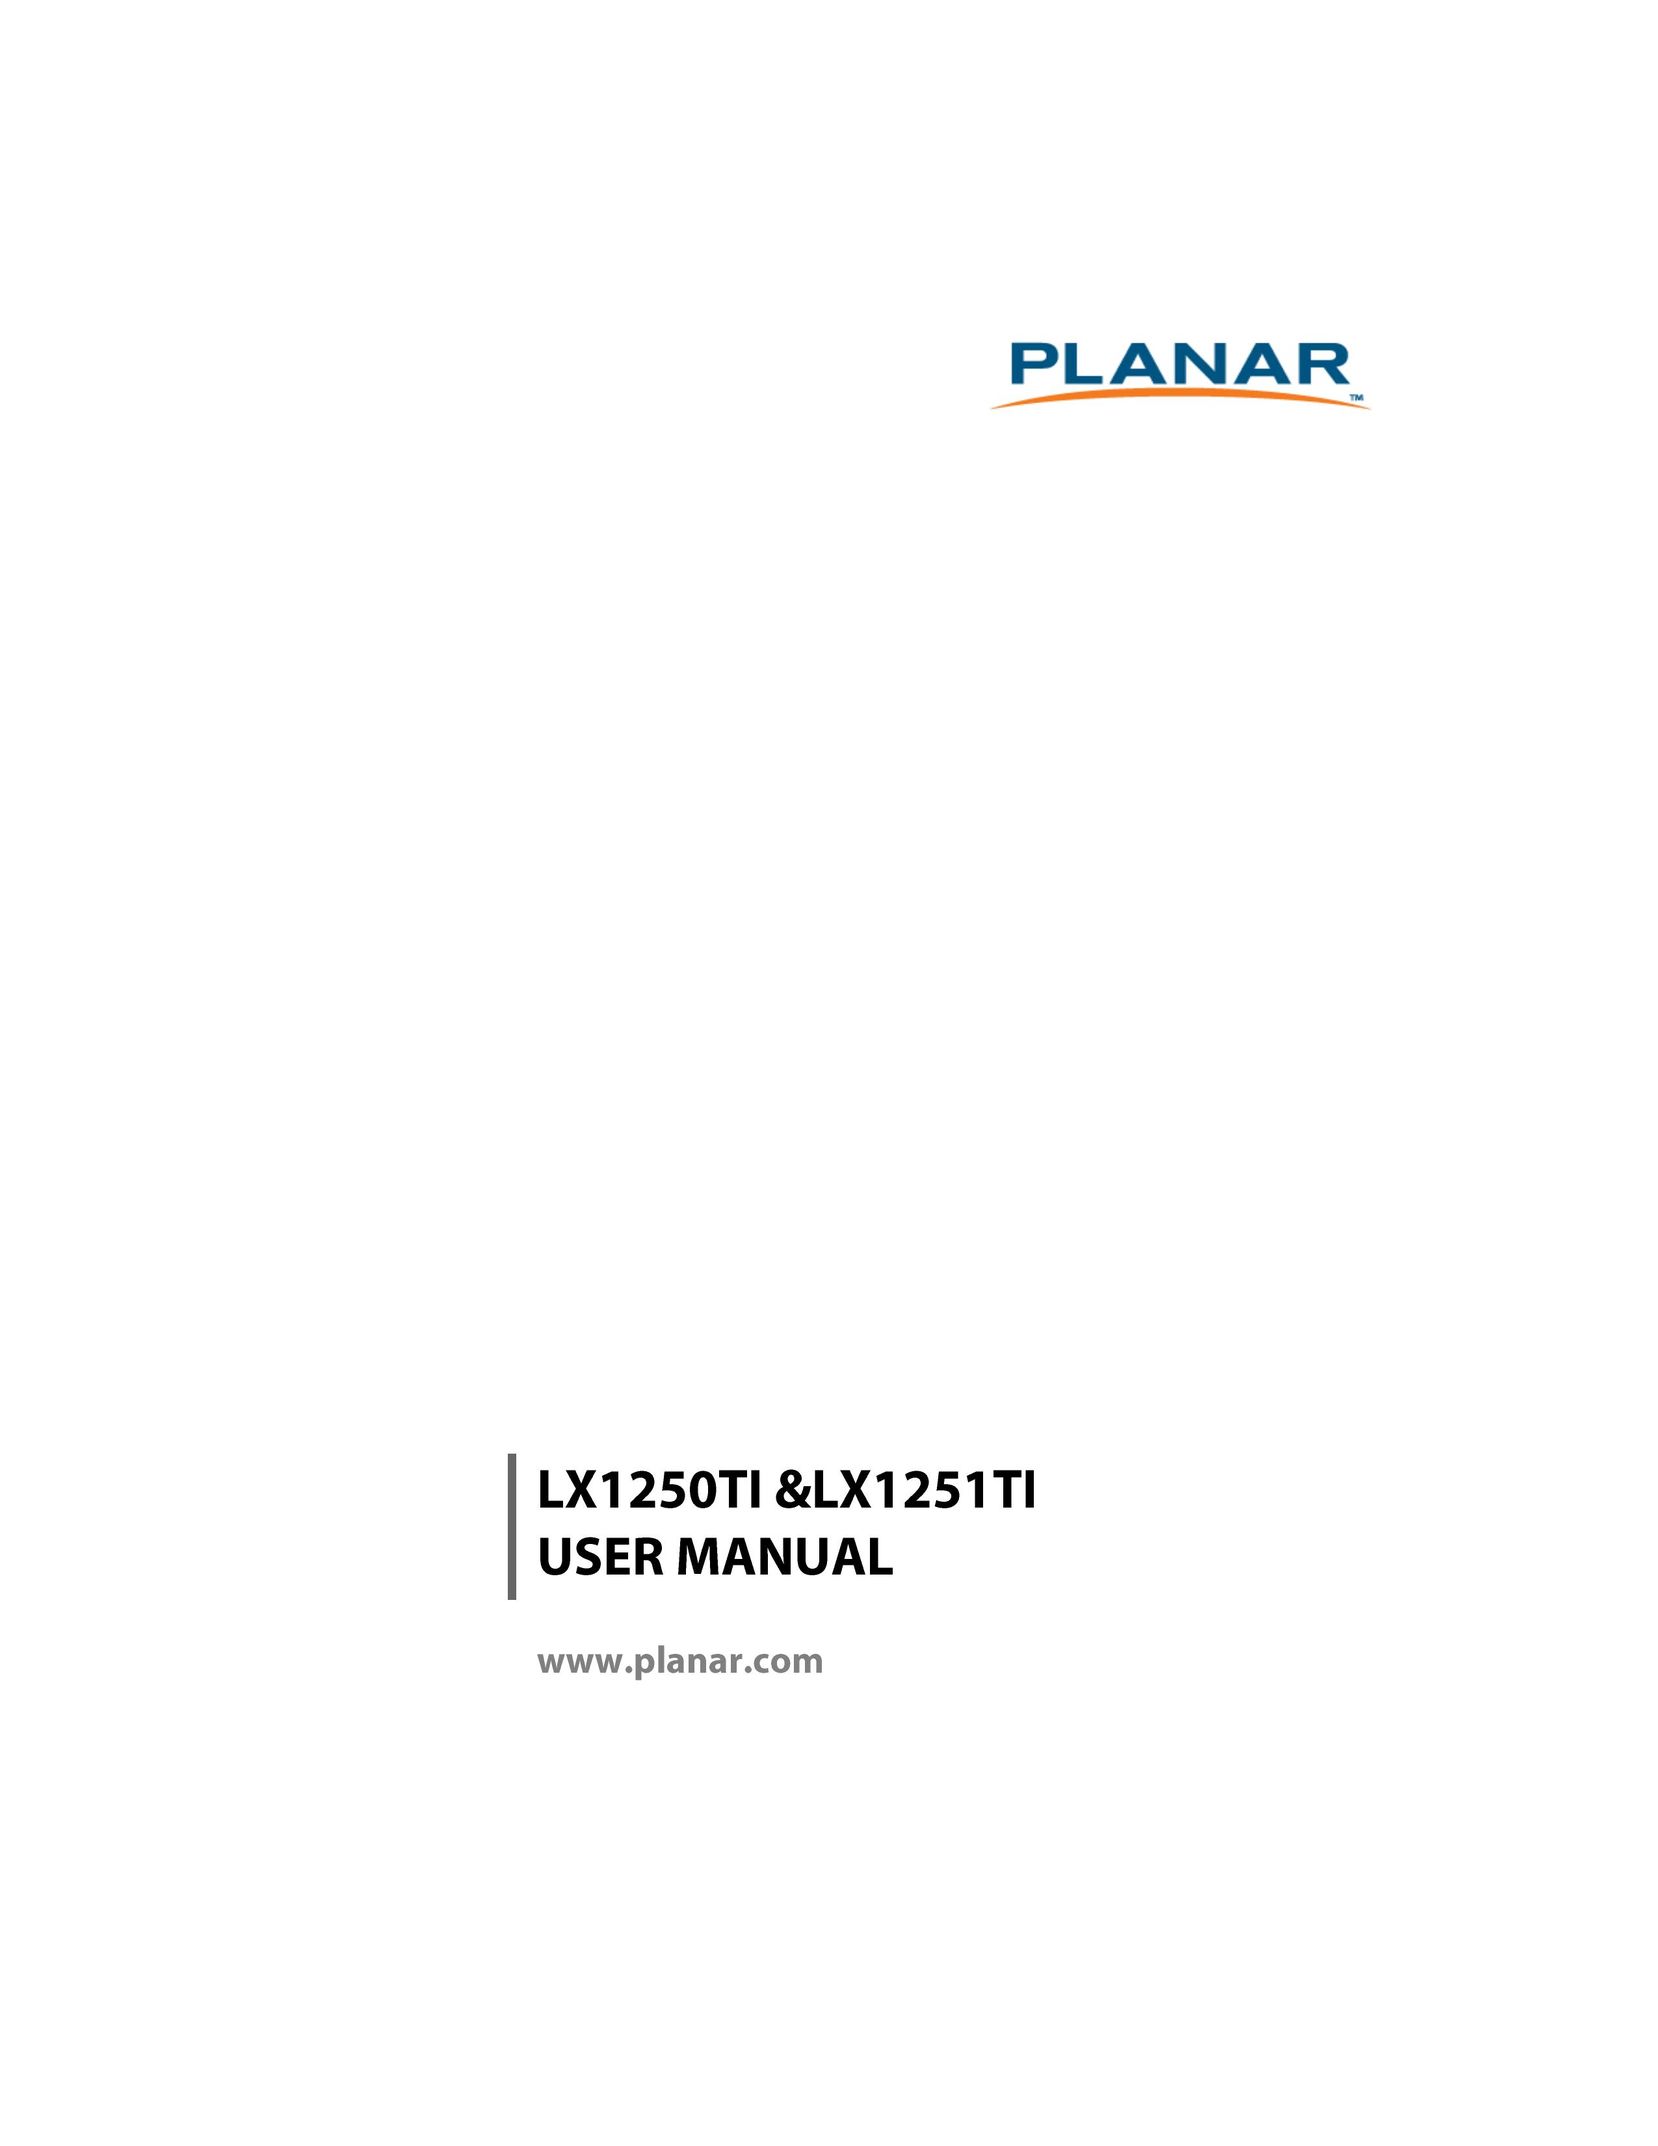 Planar LX1251TI Car Video System User Manual